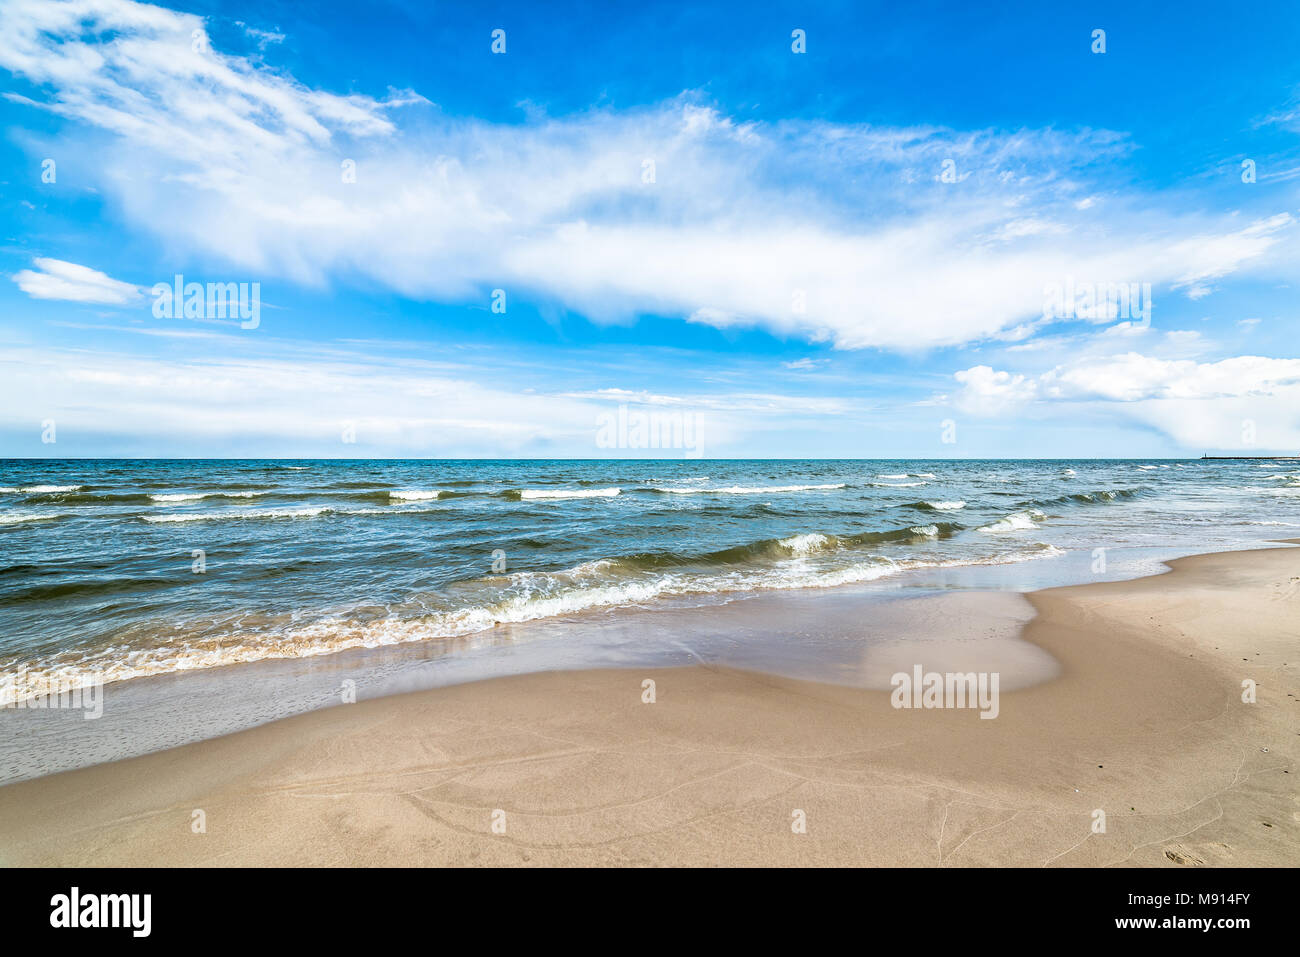 Meer, Strand, Landschaft, Küste mit Wellen im Meer, touristische Kurort - Leba, Ostsee, Polen Stockfoto